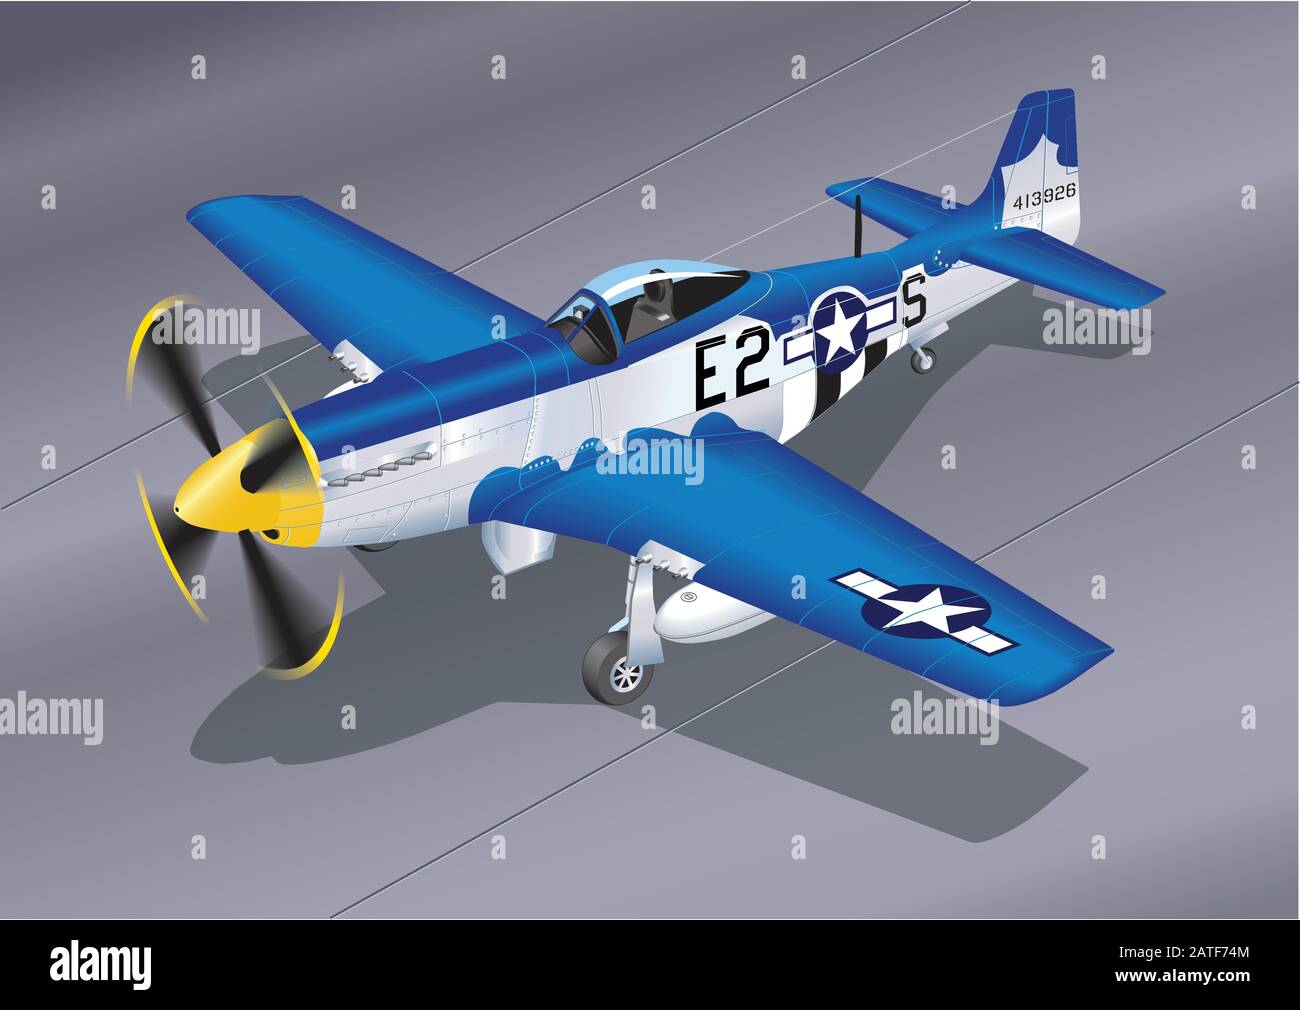 Detailed Vector Illustration of P-51 Mustang 'Easy 2 Sugar' Fighter Plane Stock Vector